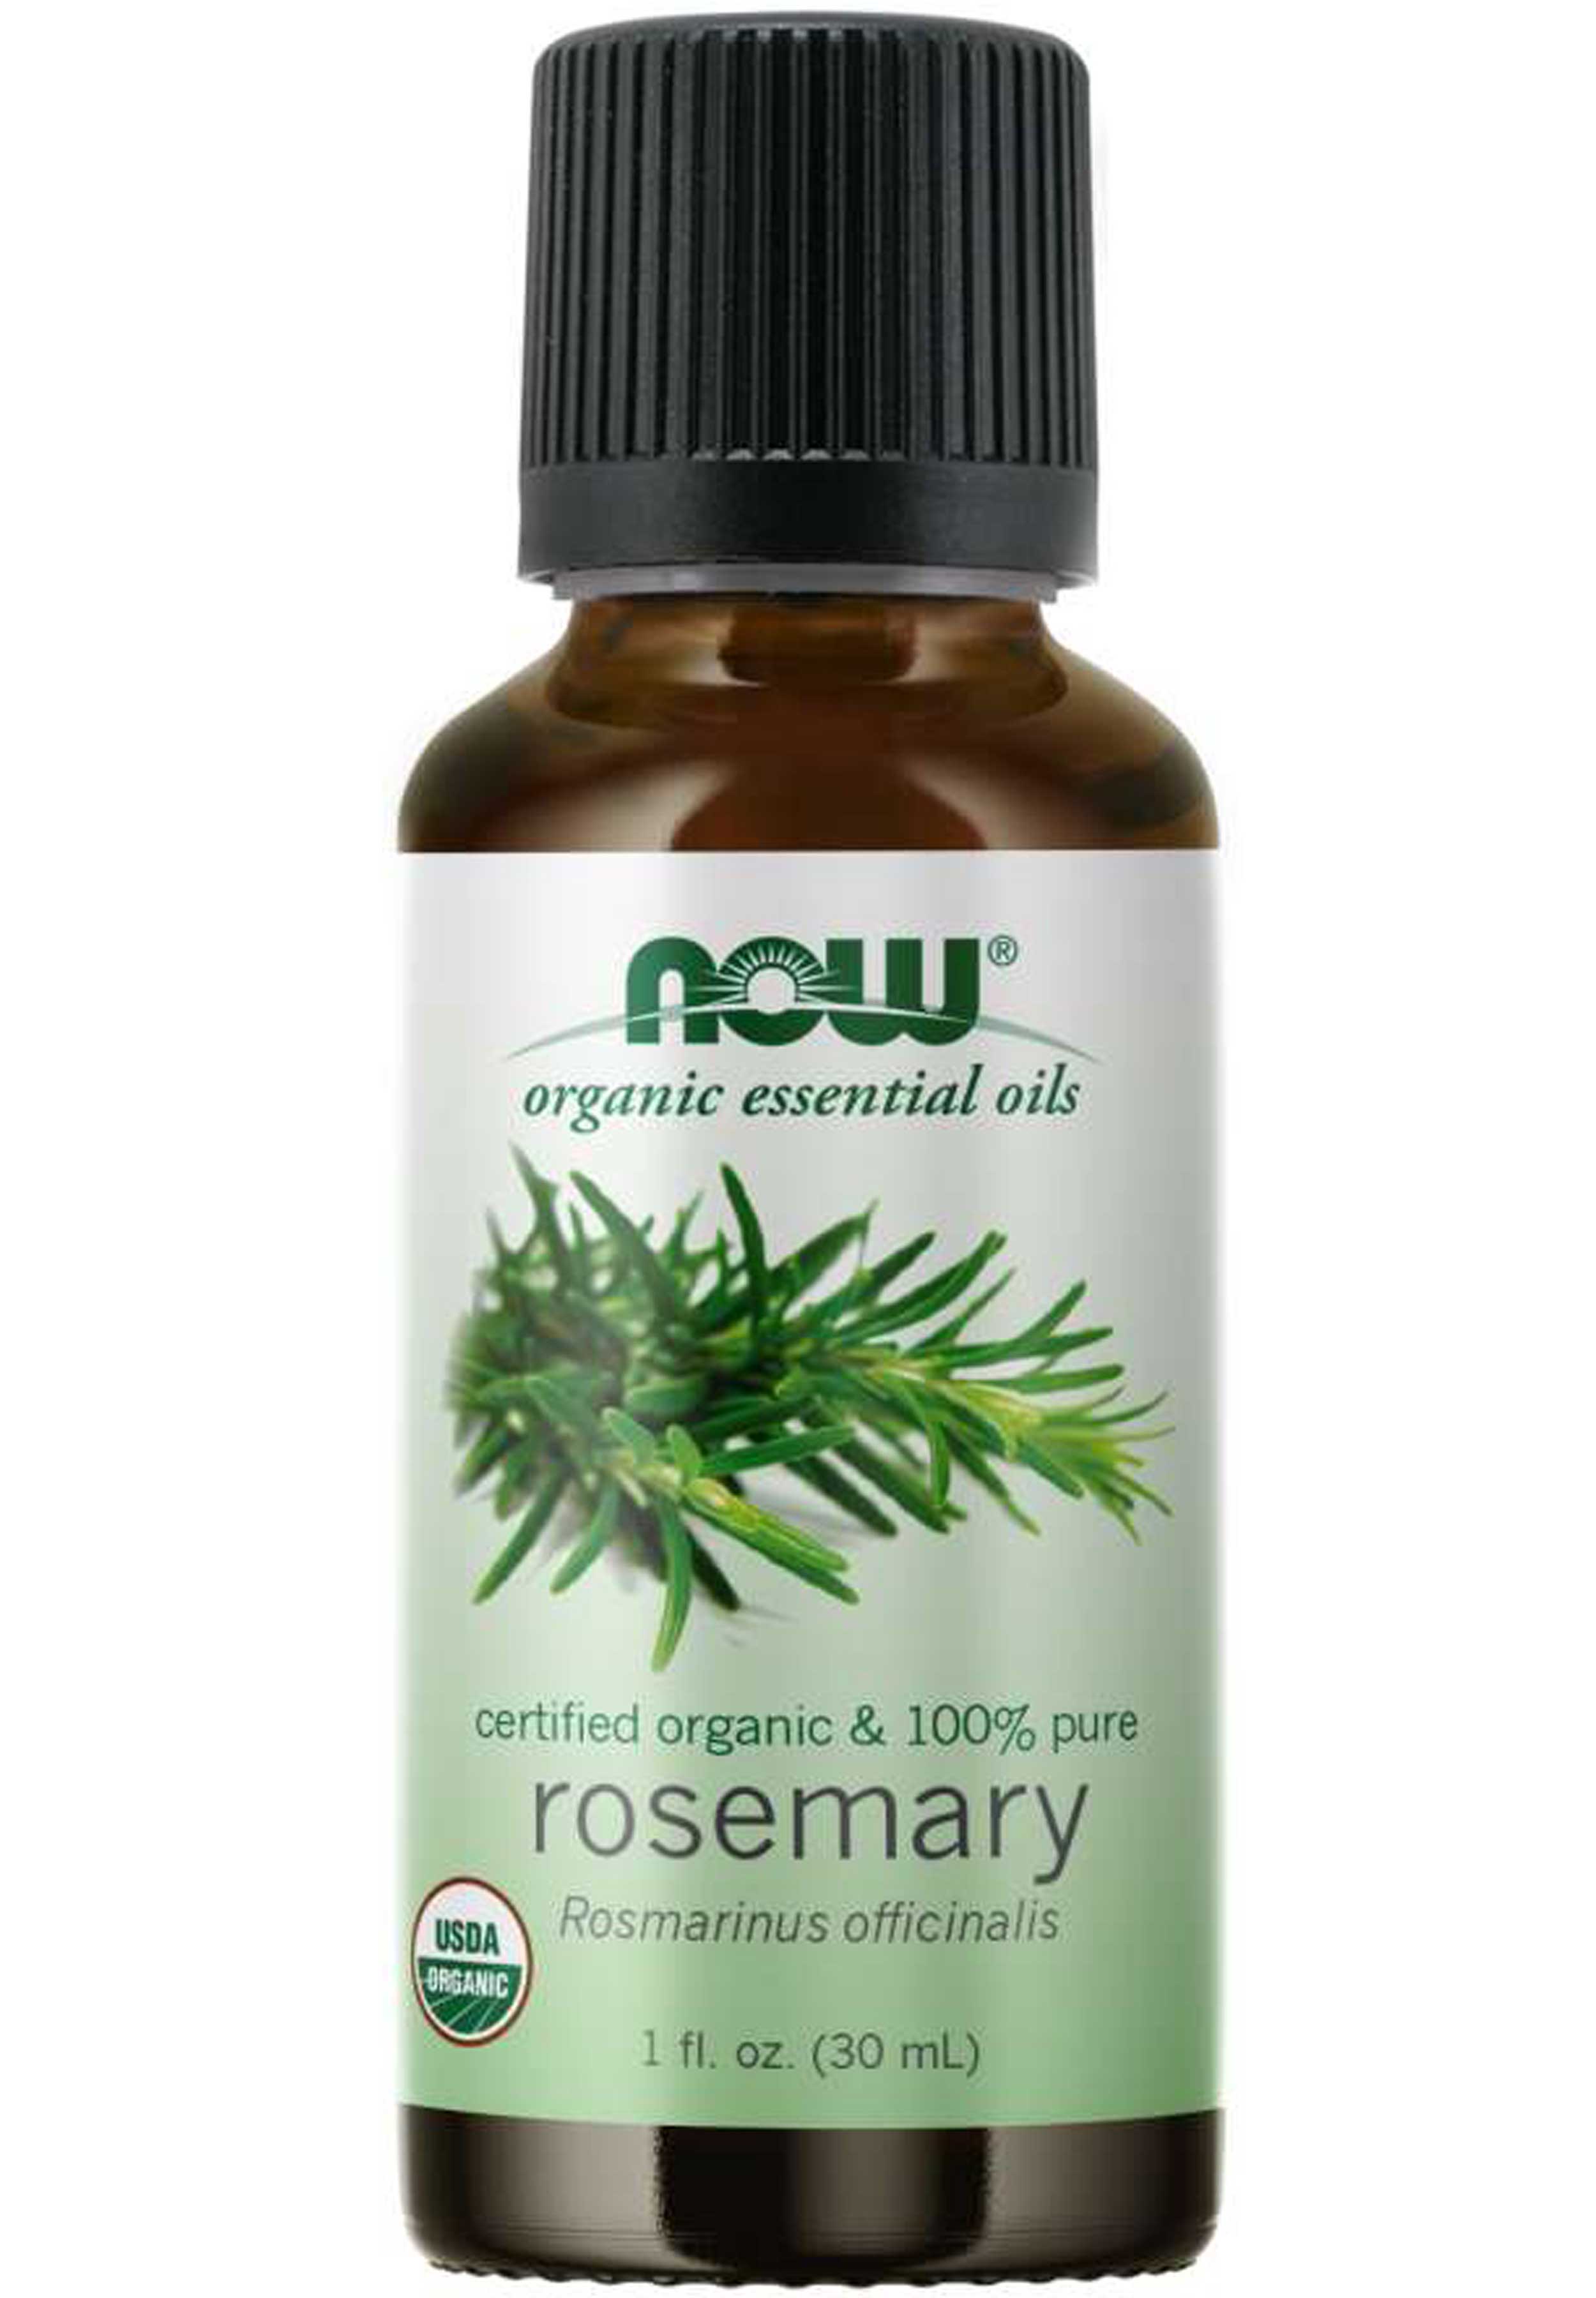 NOW Organic Essential Oils Rosemary Oil, Organic